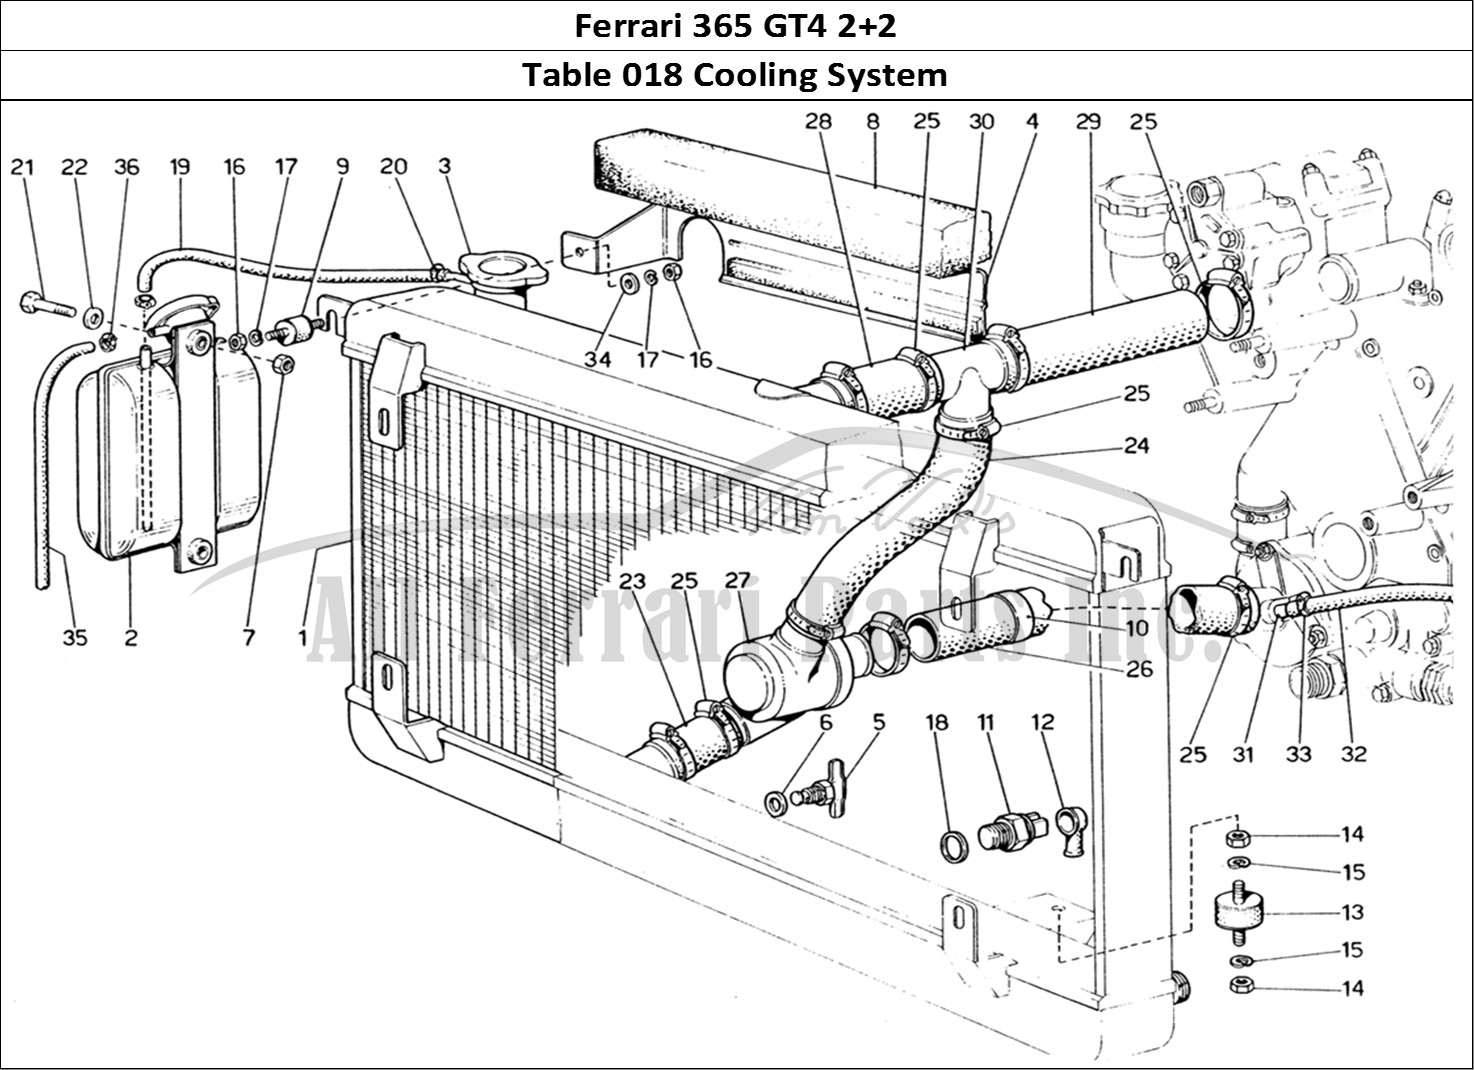 Ferrari Parts Ferrari 365 GT4 2+2 (1973) Page 018 Cooling System